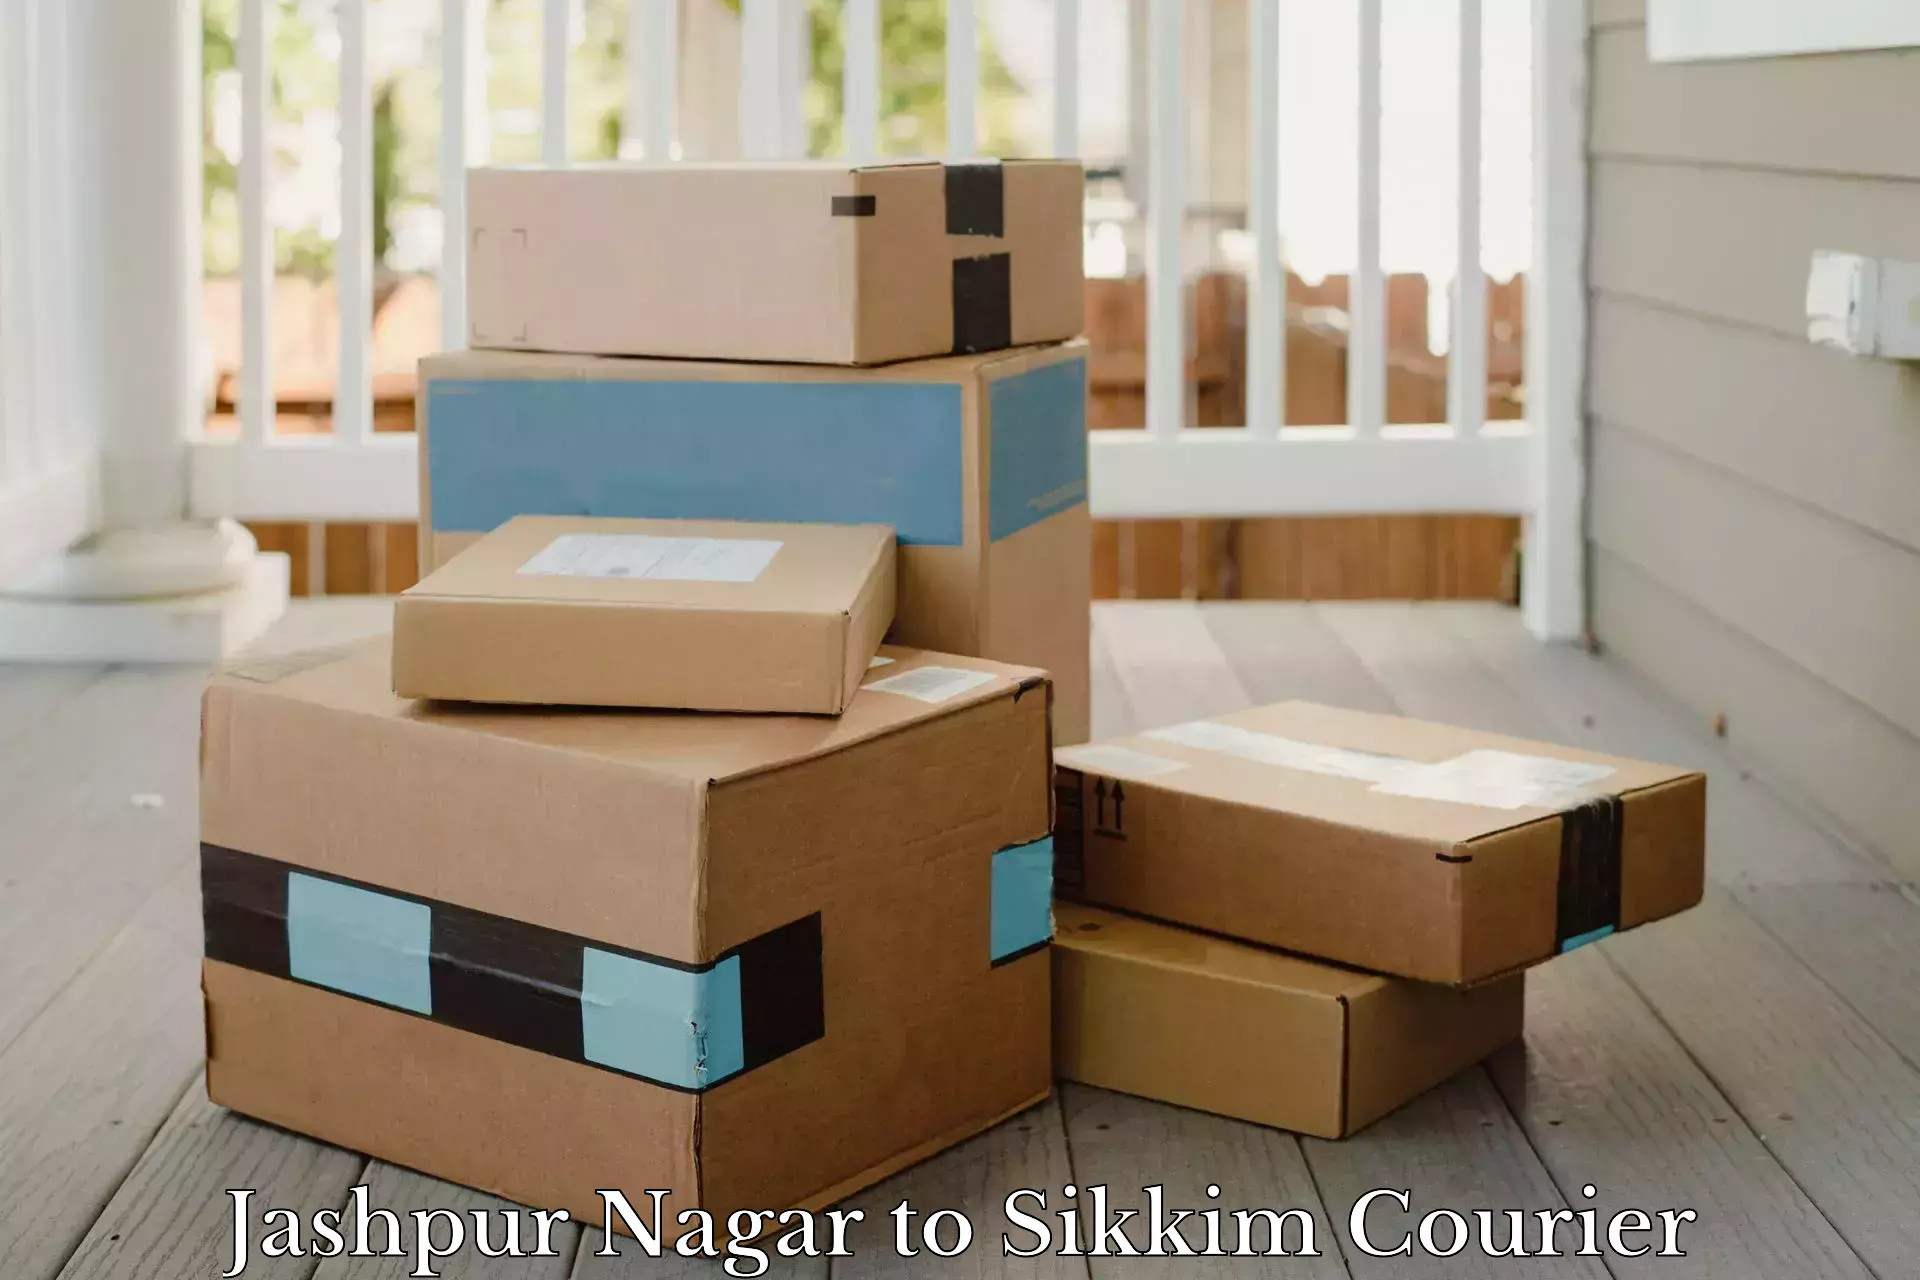 24-hour courier service Jashpur Nagar to Rangpo